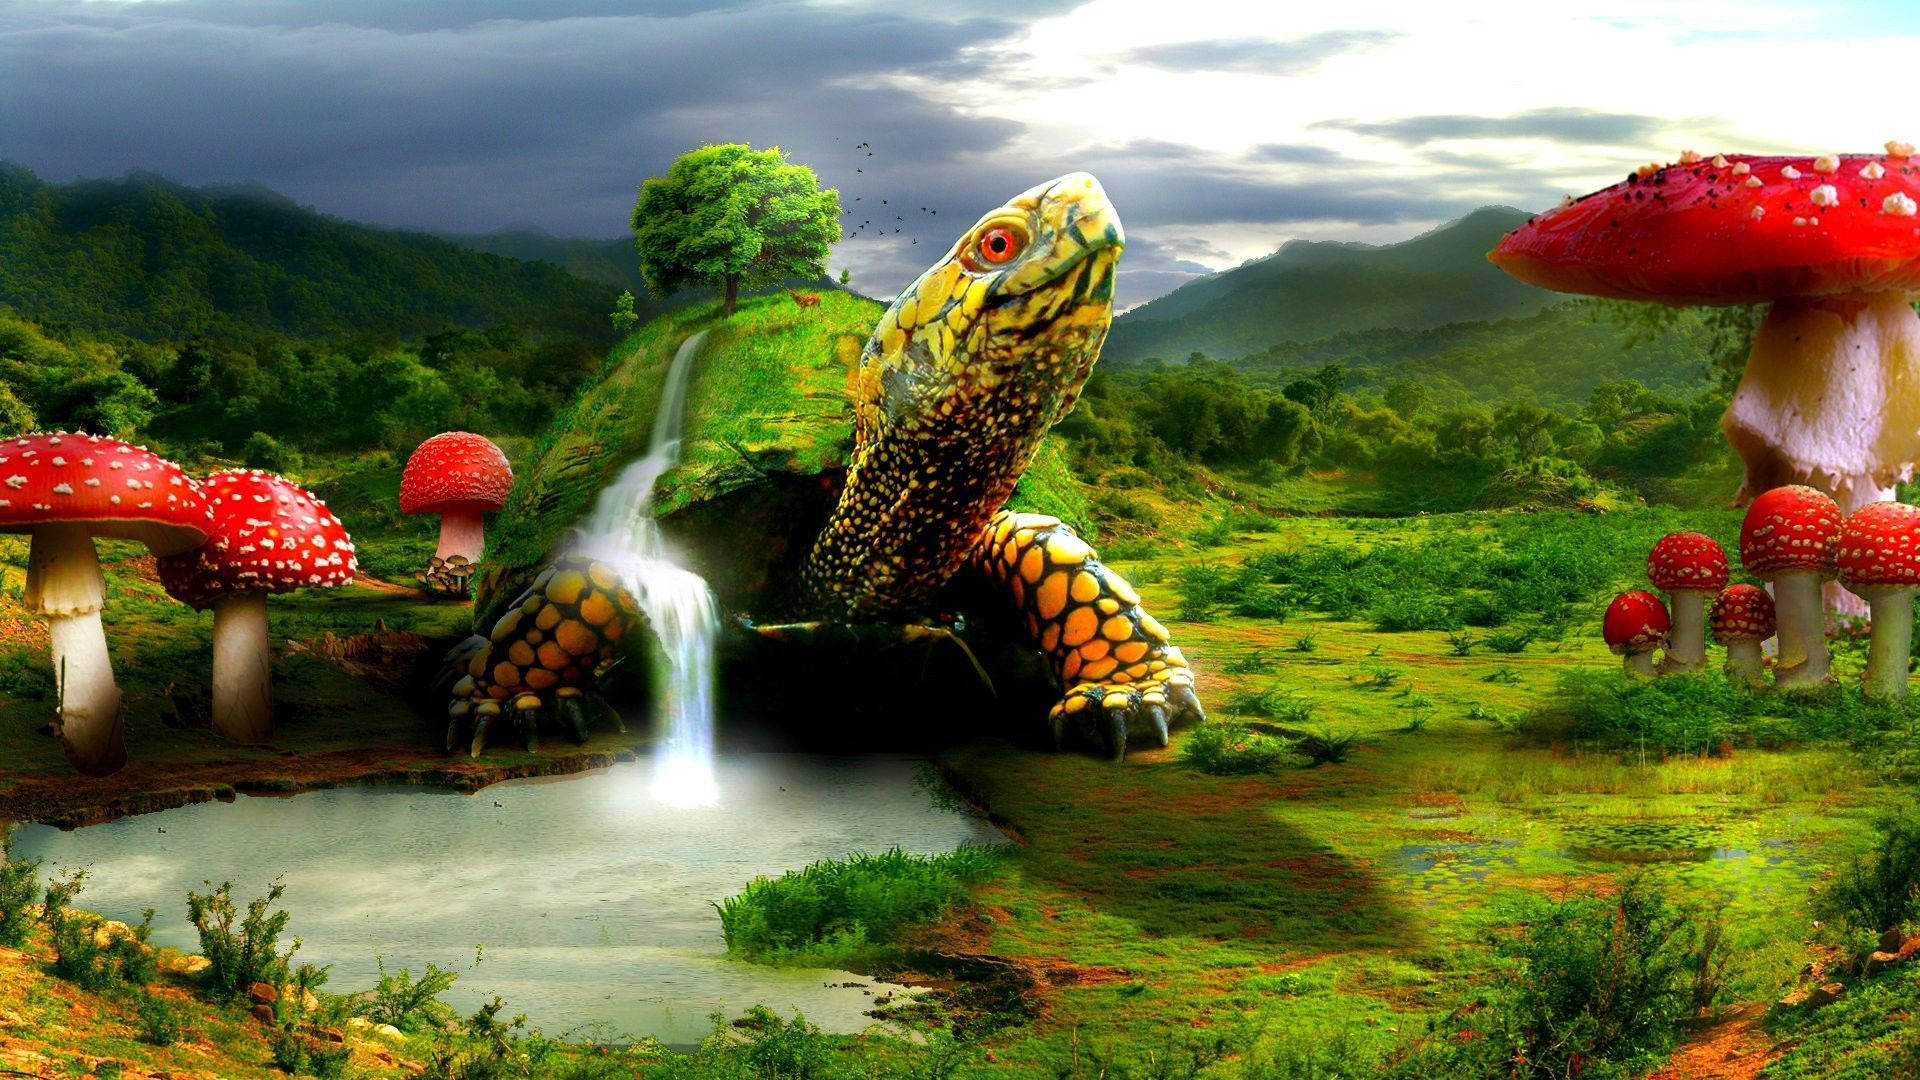 Cool Turtle Digital Fantasy Wallpaper